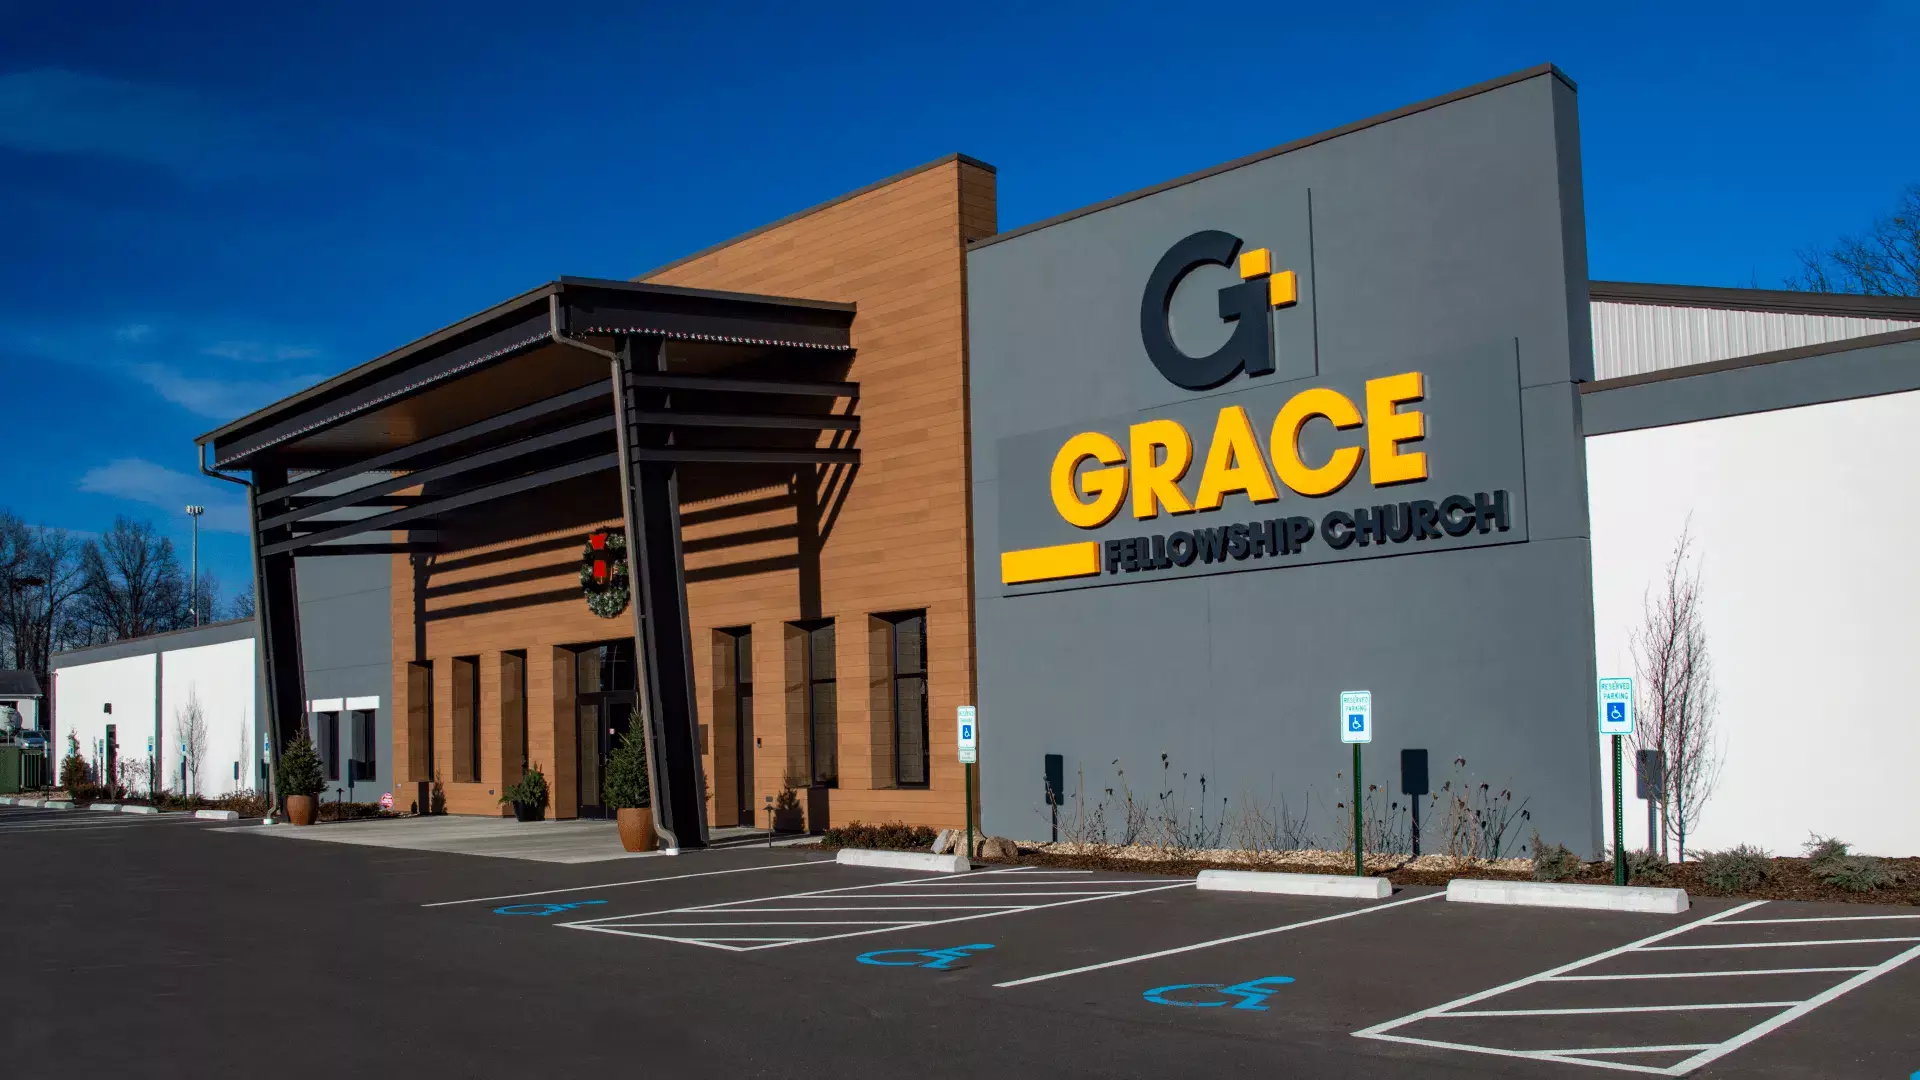 Grace Fellowship exterior church architect